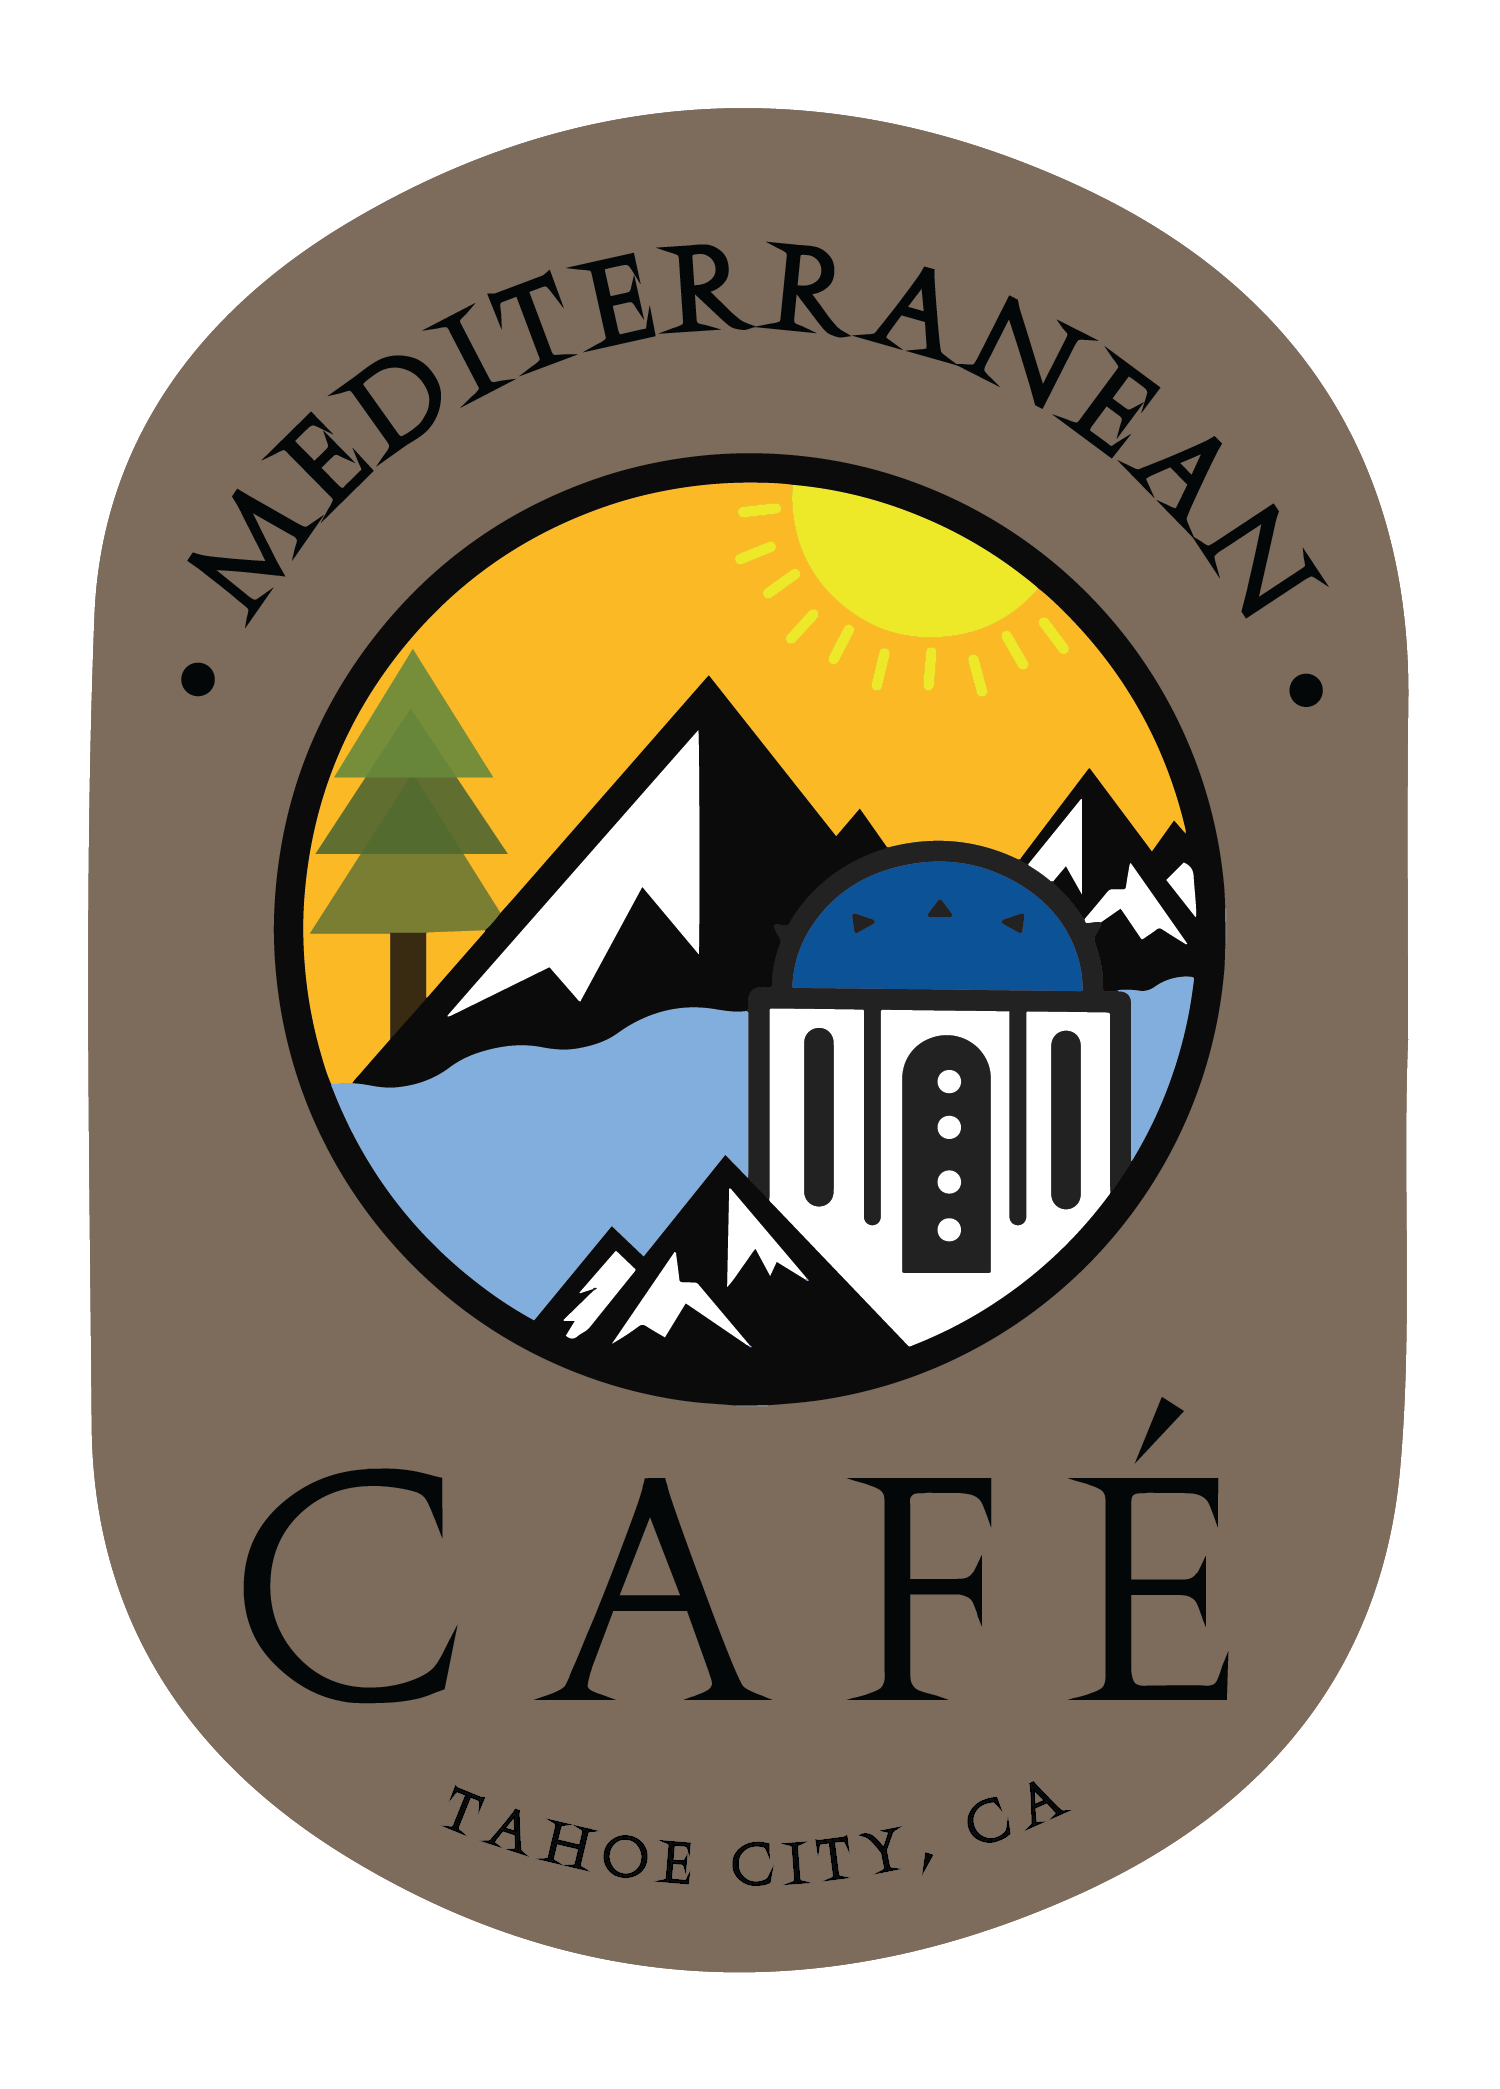 Mediterranean Cafe 395 North Lake Blvd